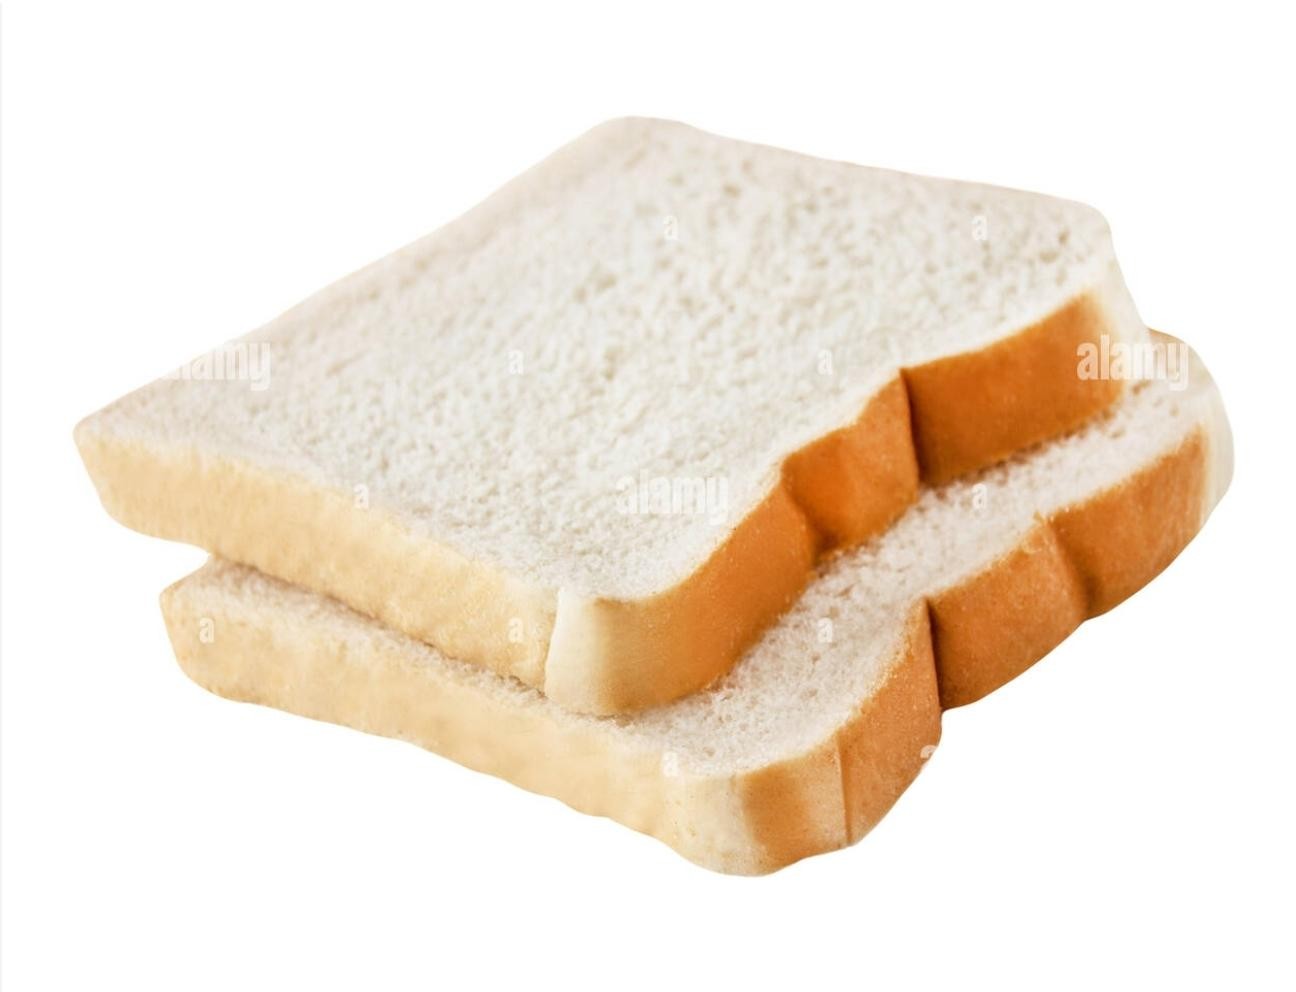 Bread (2) slices